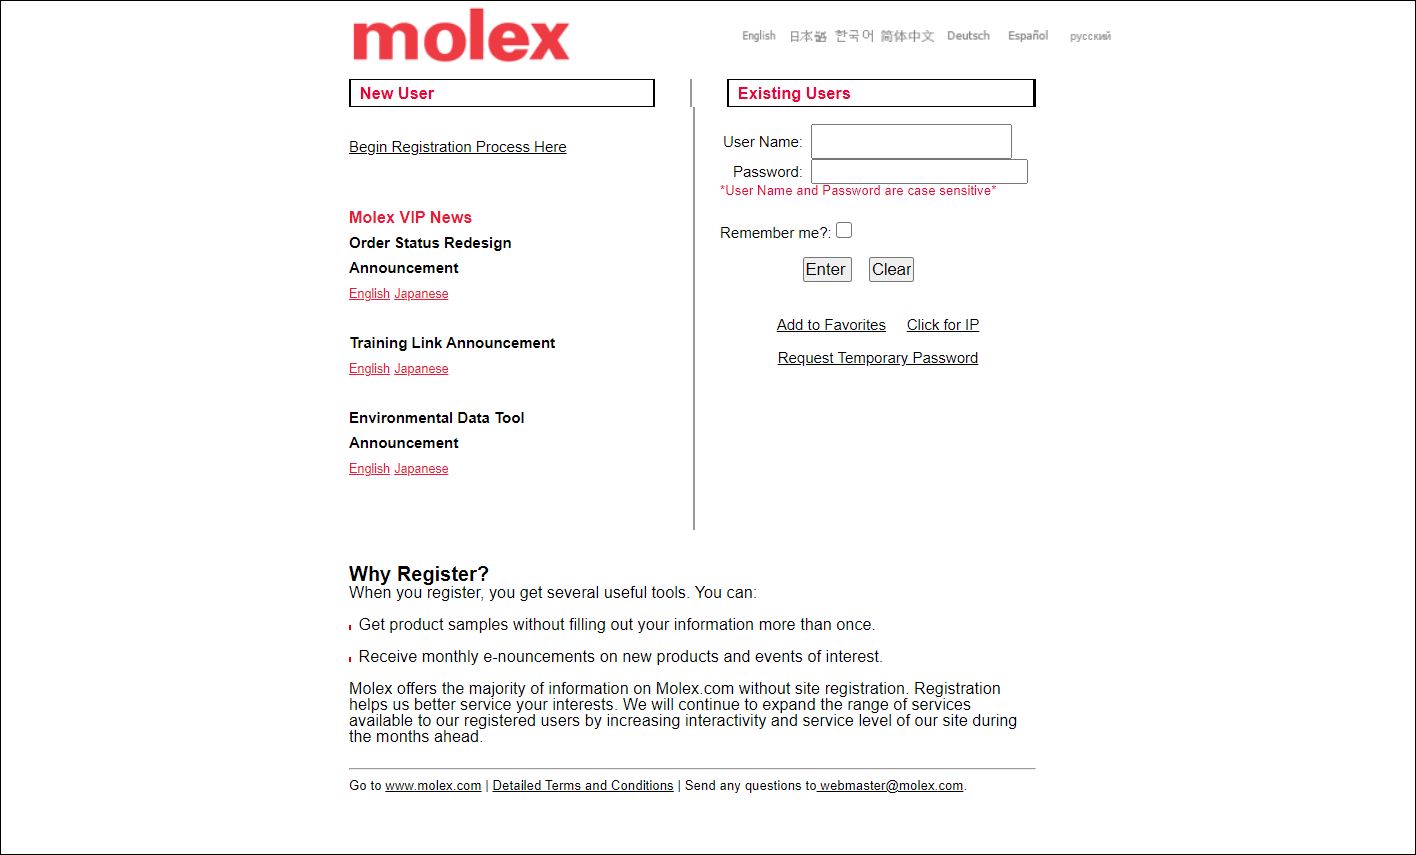 Myhr Molex - Step by Step Guide To Use Molex HR Portal